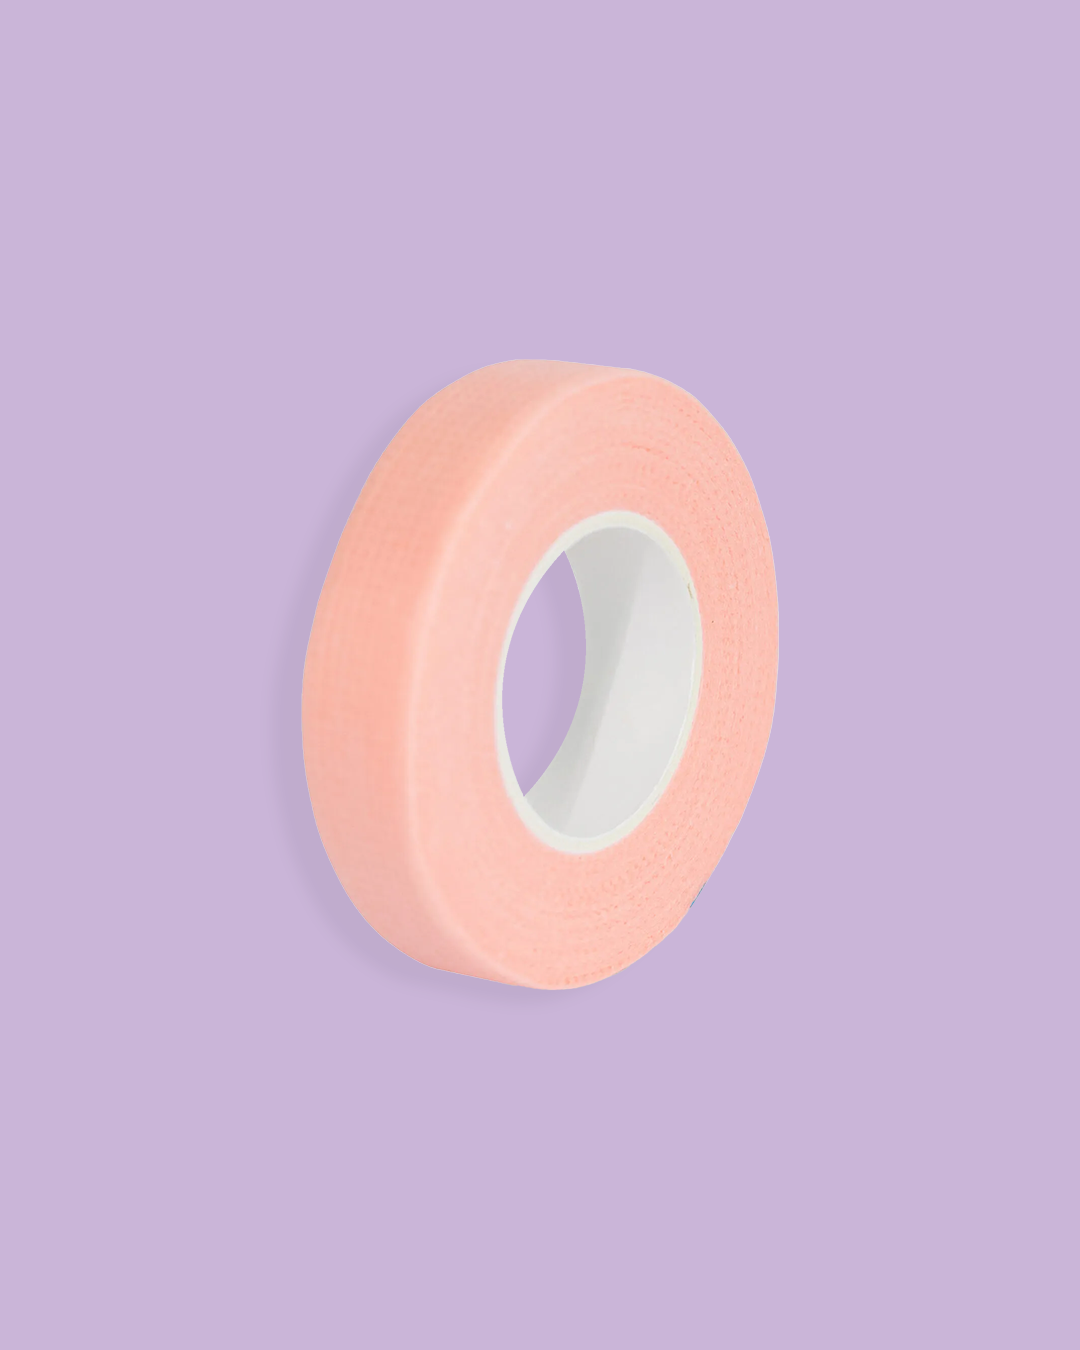 Buff Basics - Microporous Tape - Pink